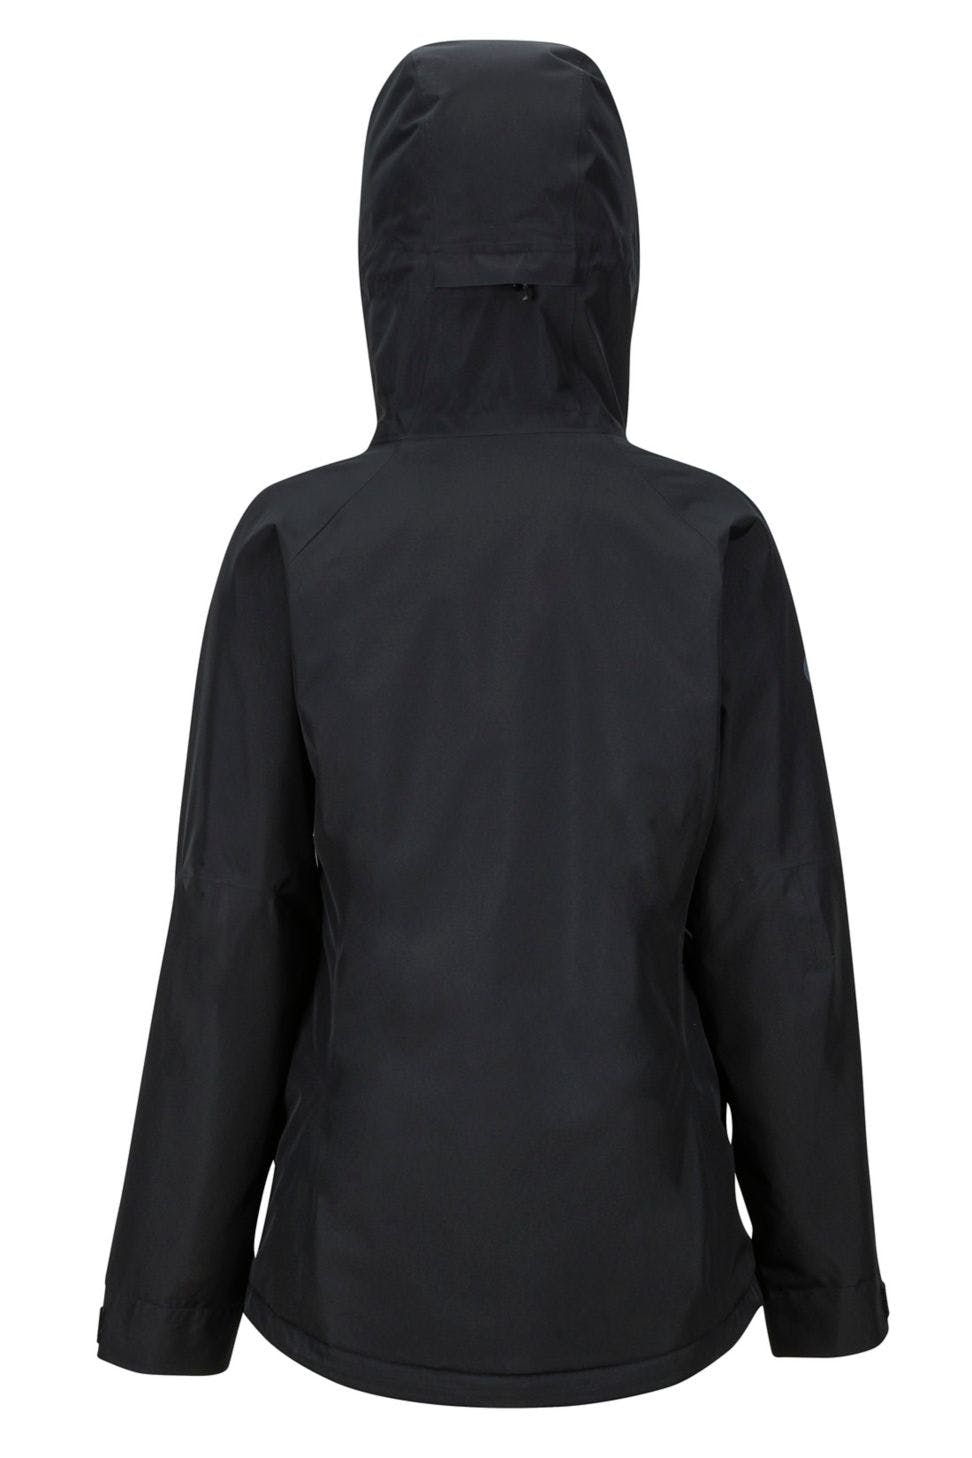 Marmot Women's Lightray GORE-TEX Jacket